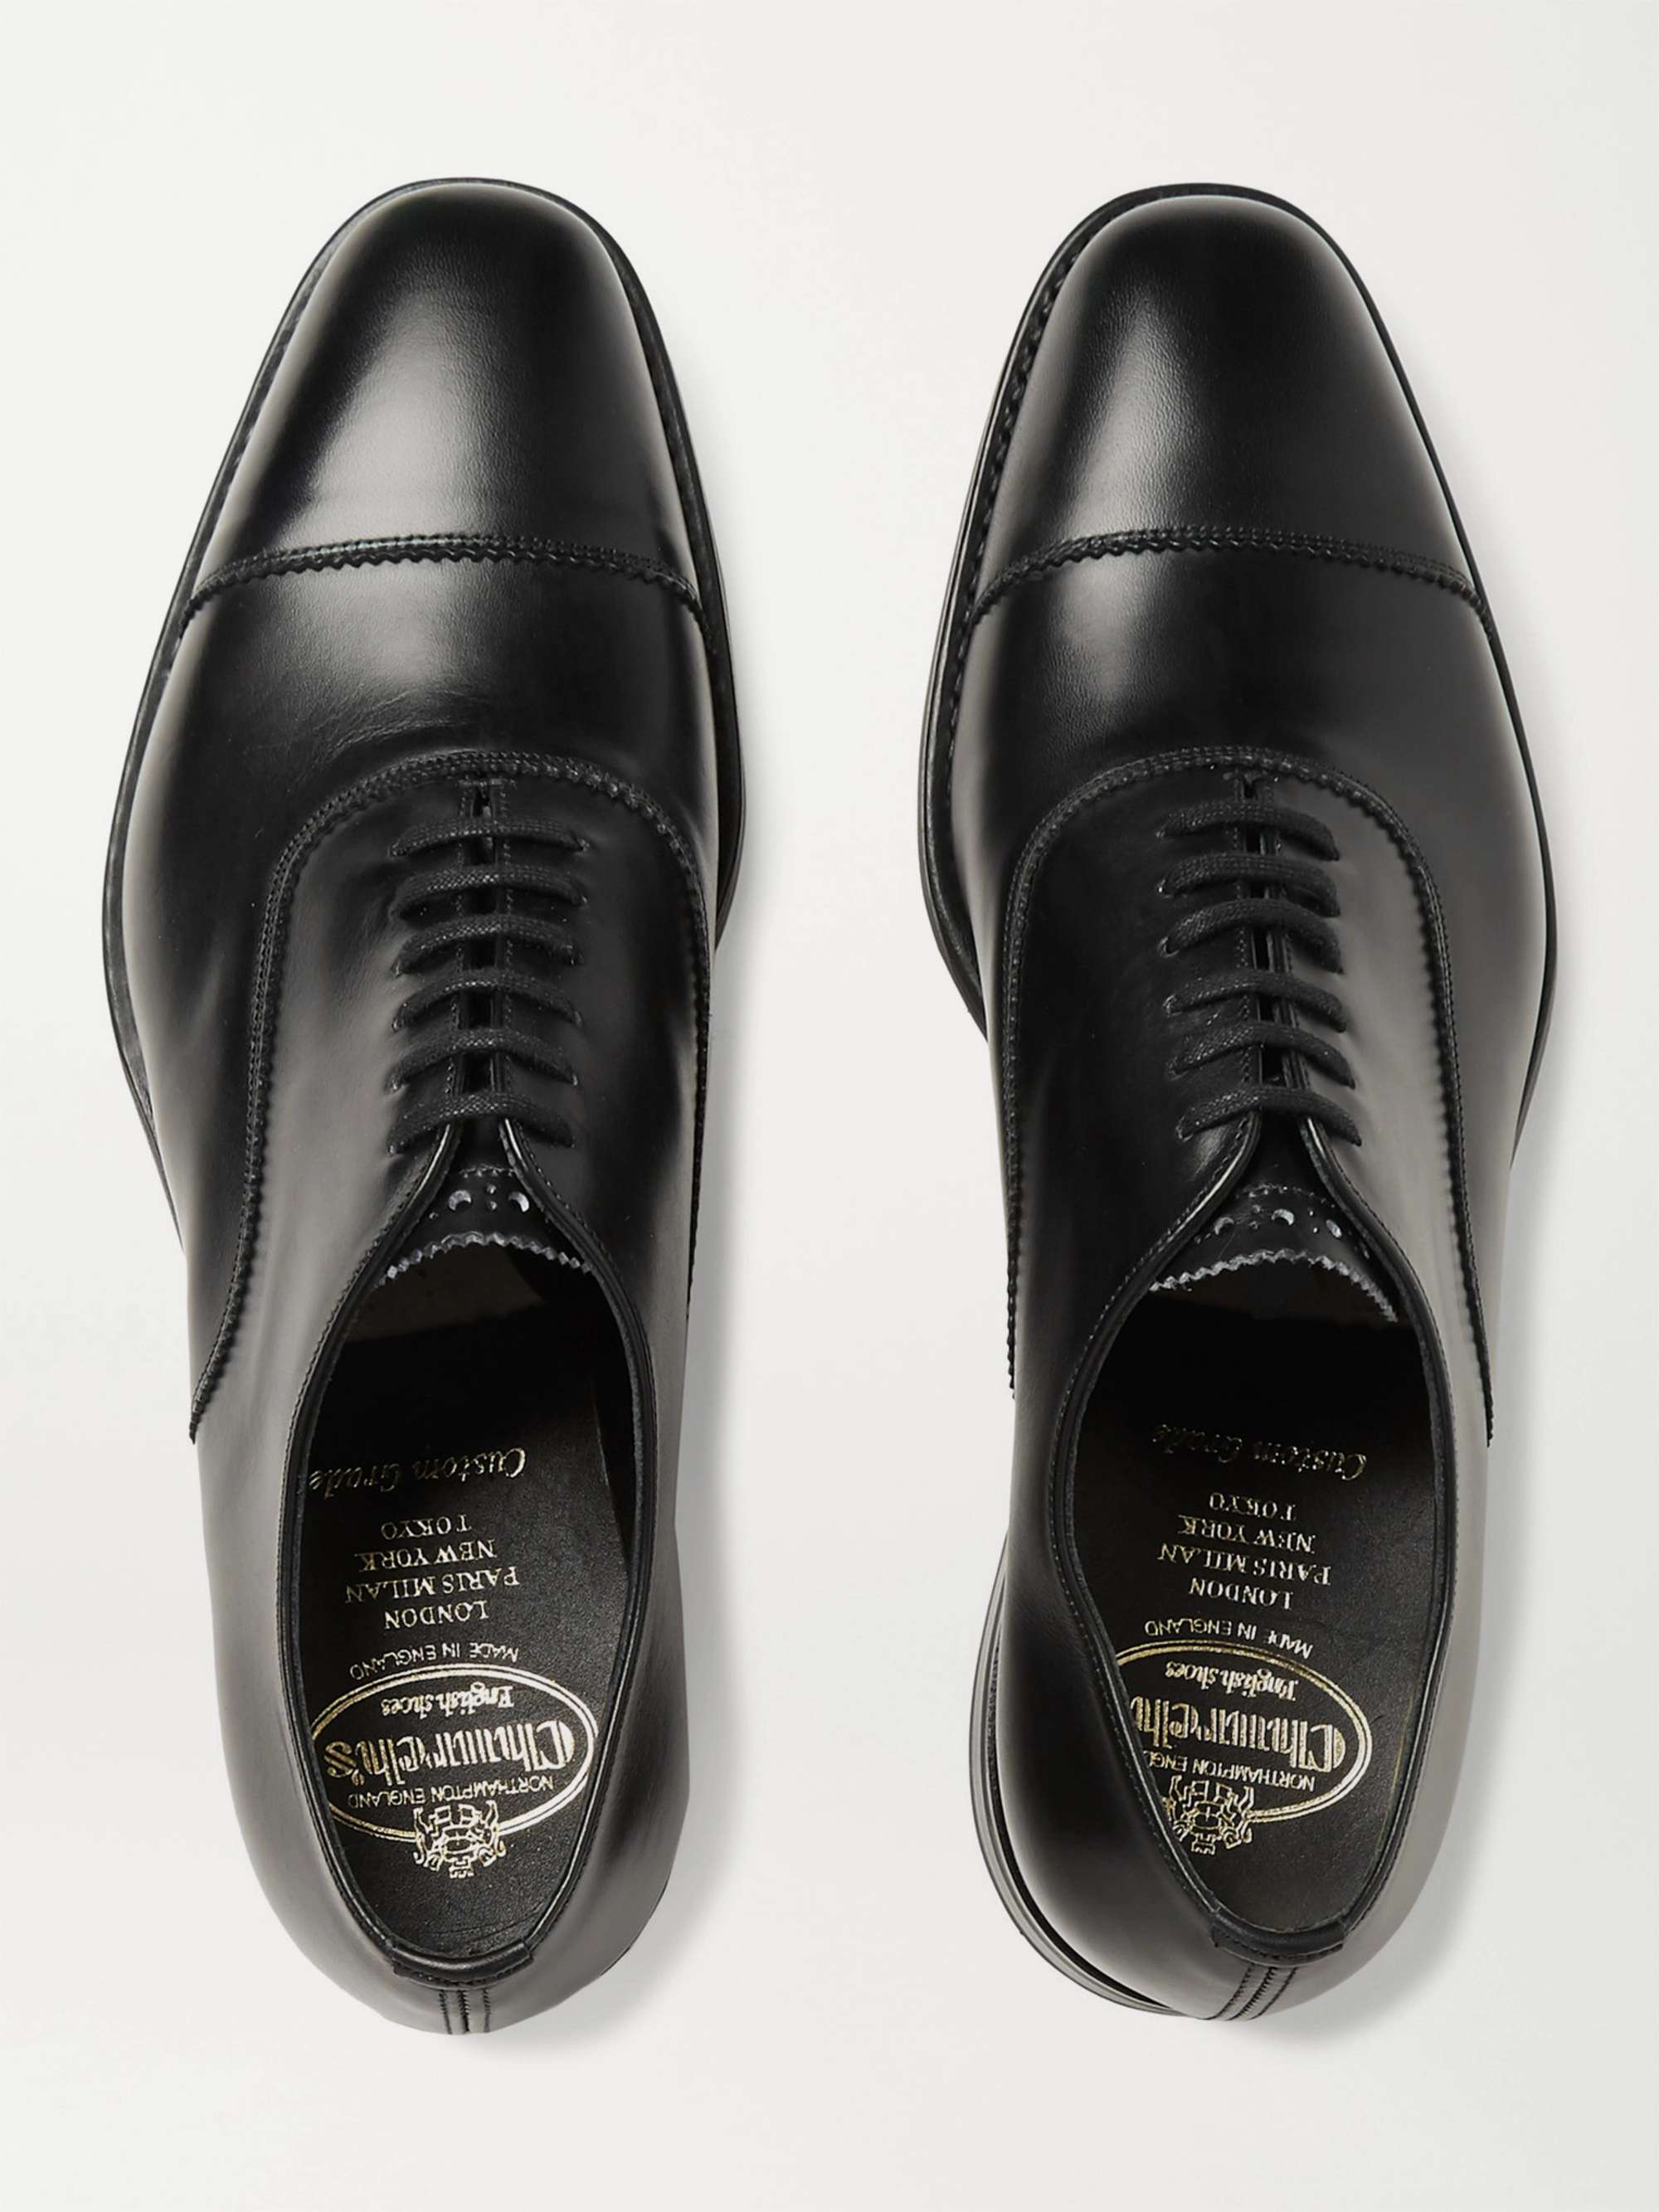 CHURCH'S Dubai Polished-Leather Oxford Shoes